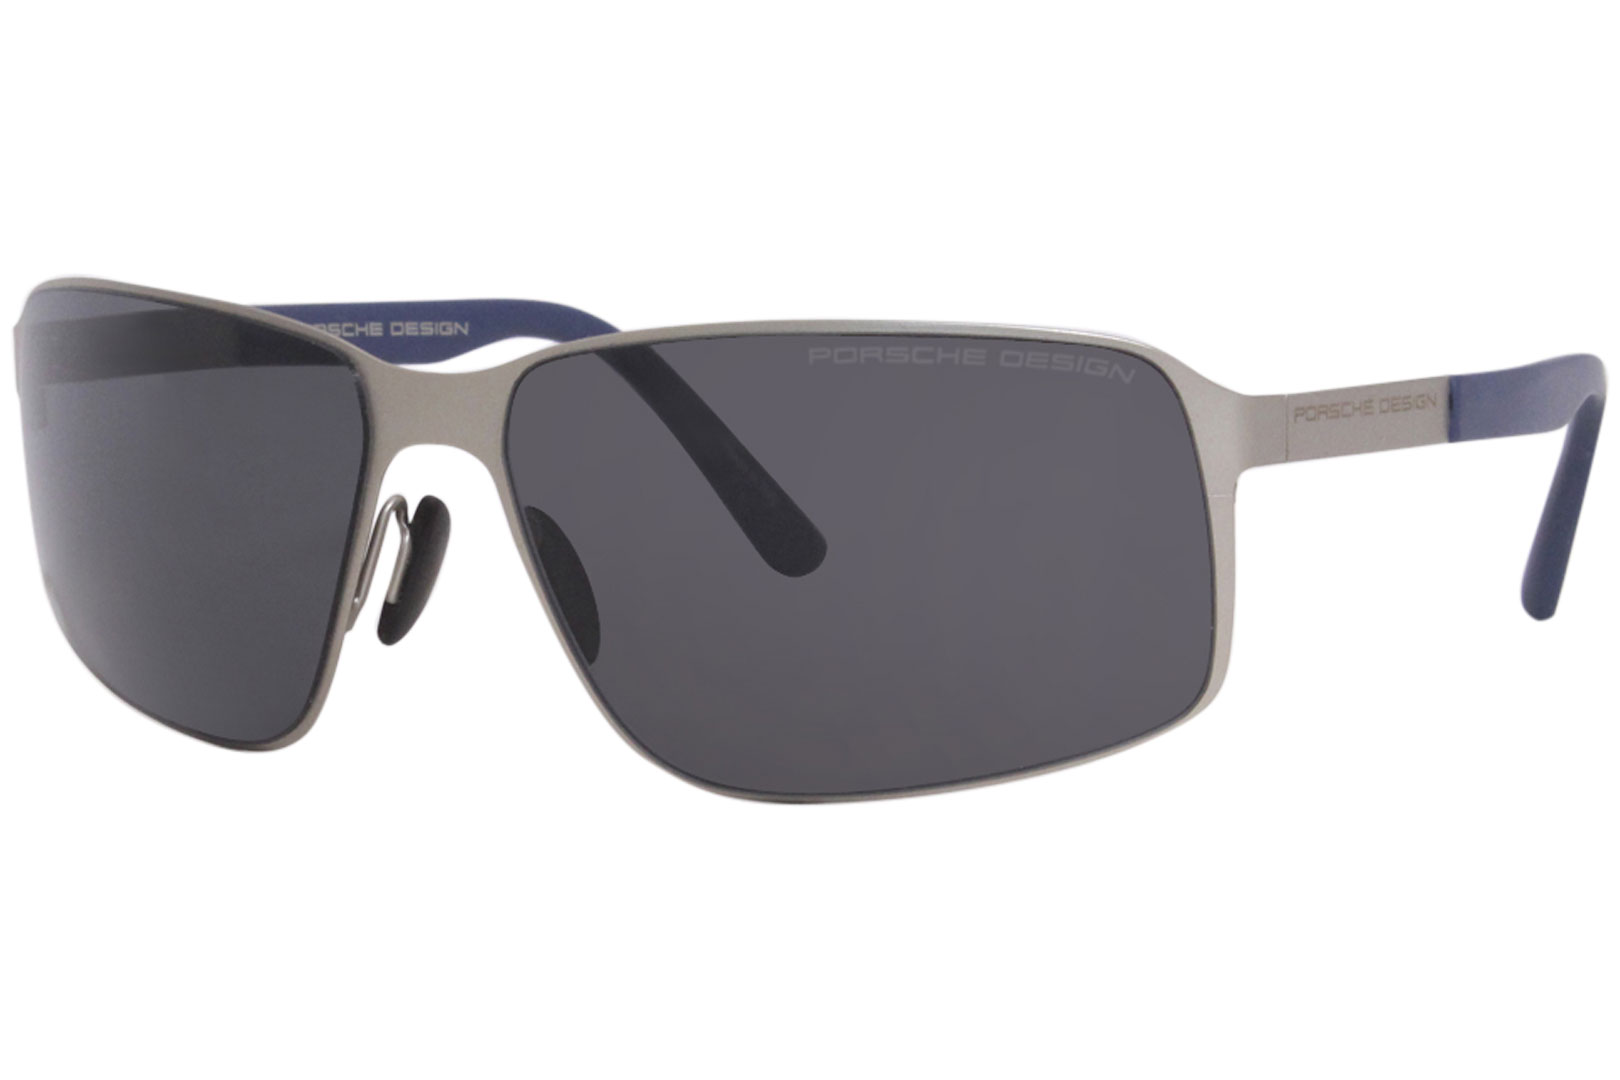 Sunglasses Porsche Design p8565 D